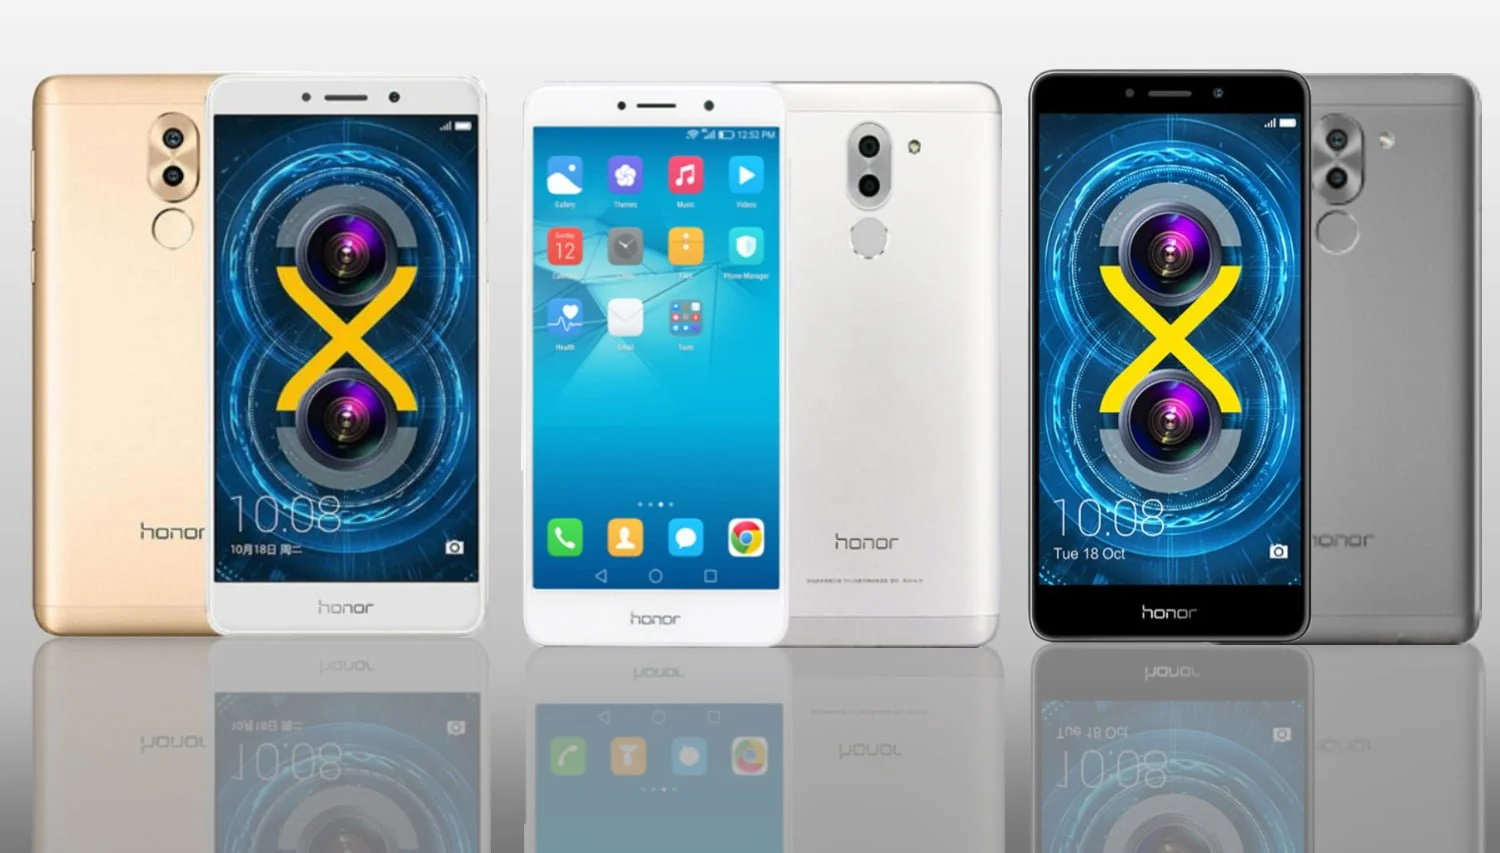 Huawei Honor 6x